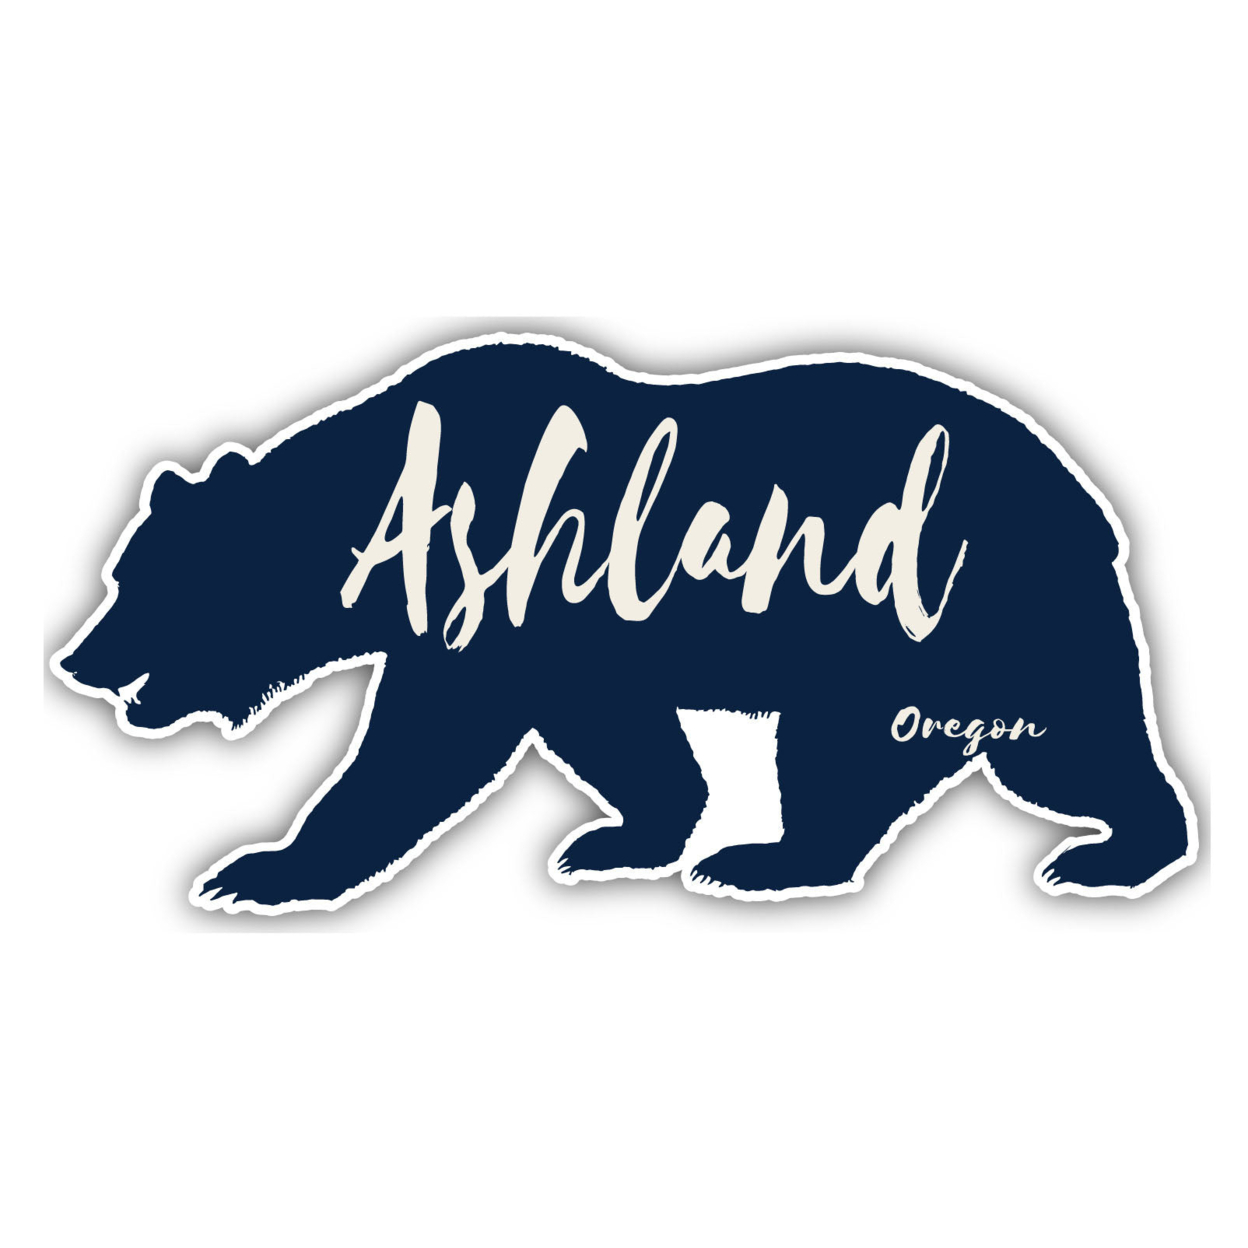 Ashland Oregon Souvenir Decorative Stickers (Choose Theme And Size) - Single Unit, 2-Inch, Camp Life